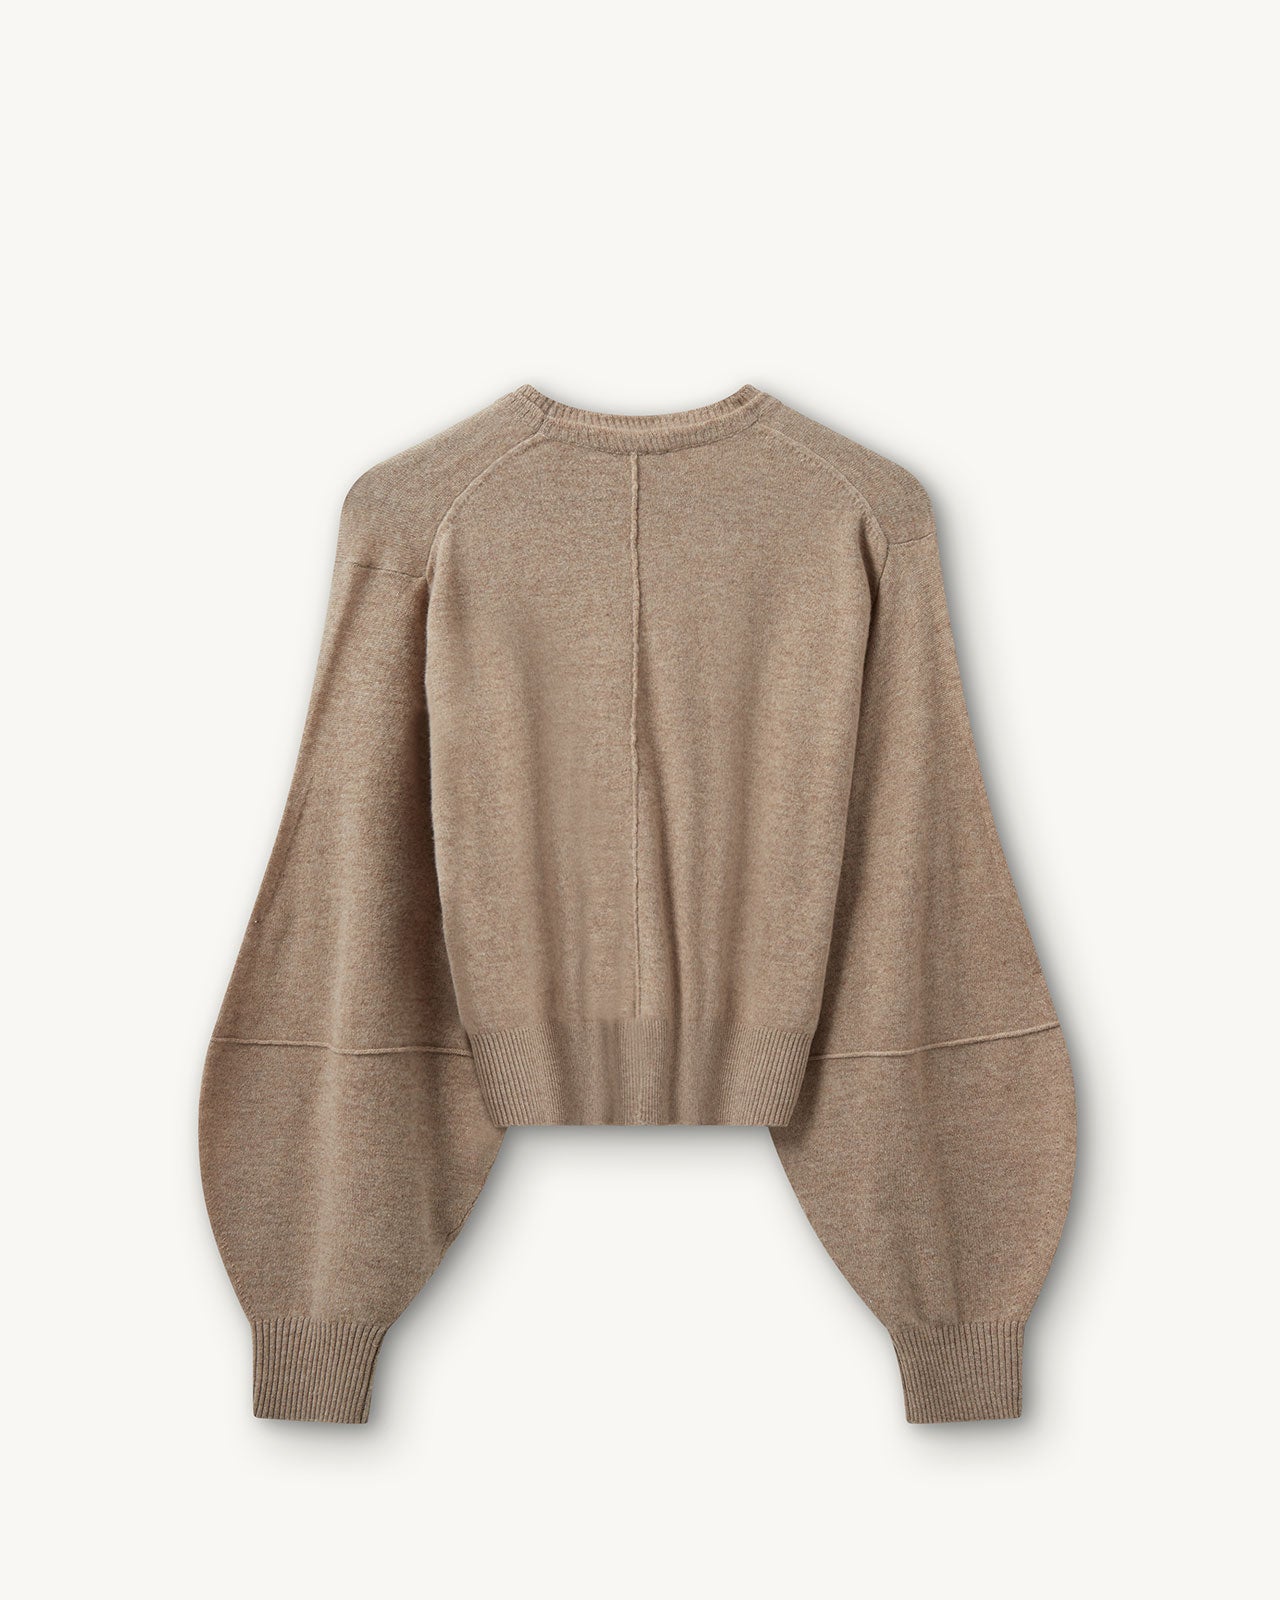 The Garment Como Neck Sweater